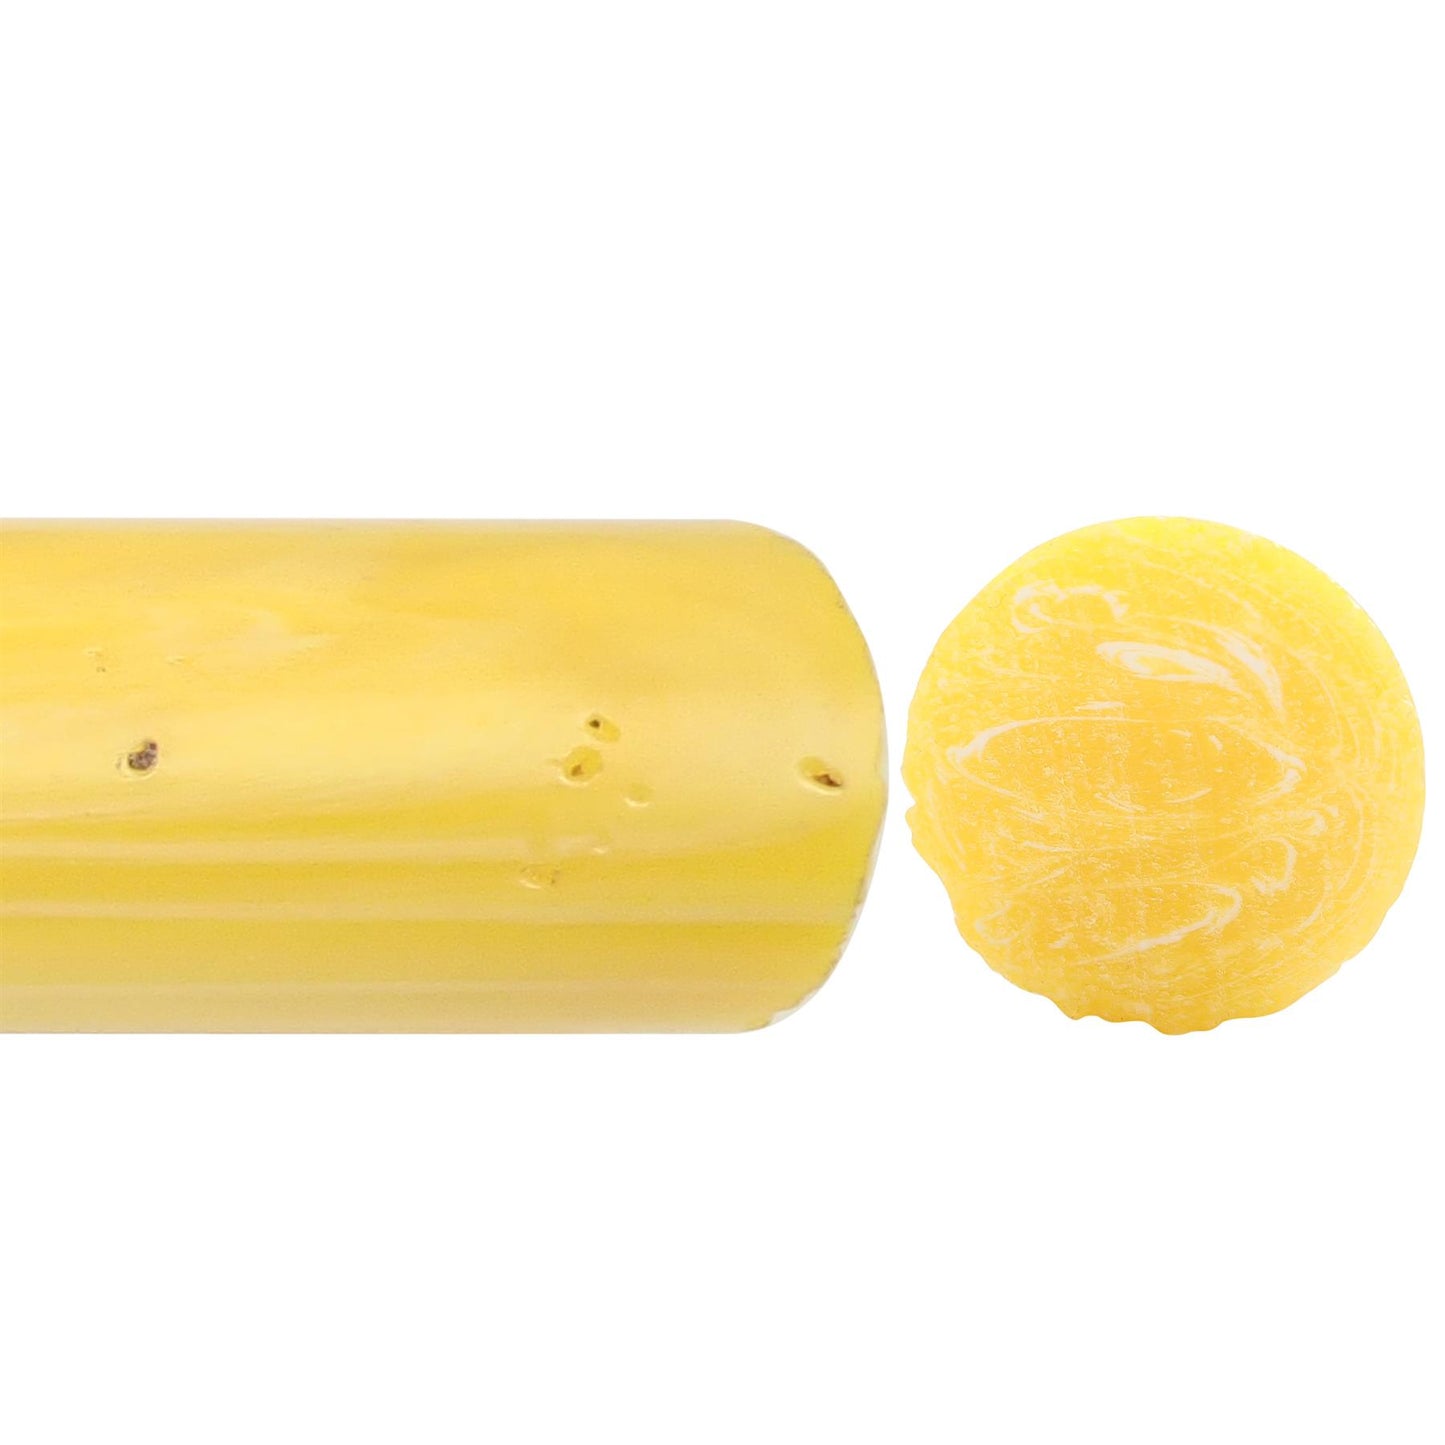 Turners' Mill Lemon Yellow Polyester Turning Blank - 150x45x45mm